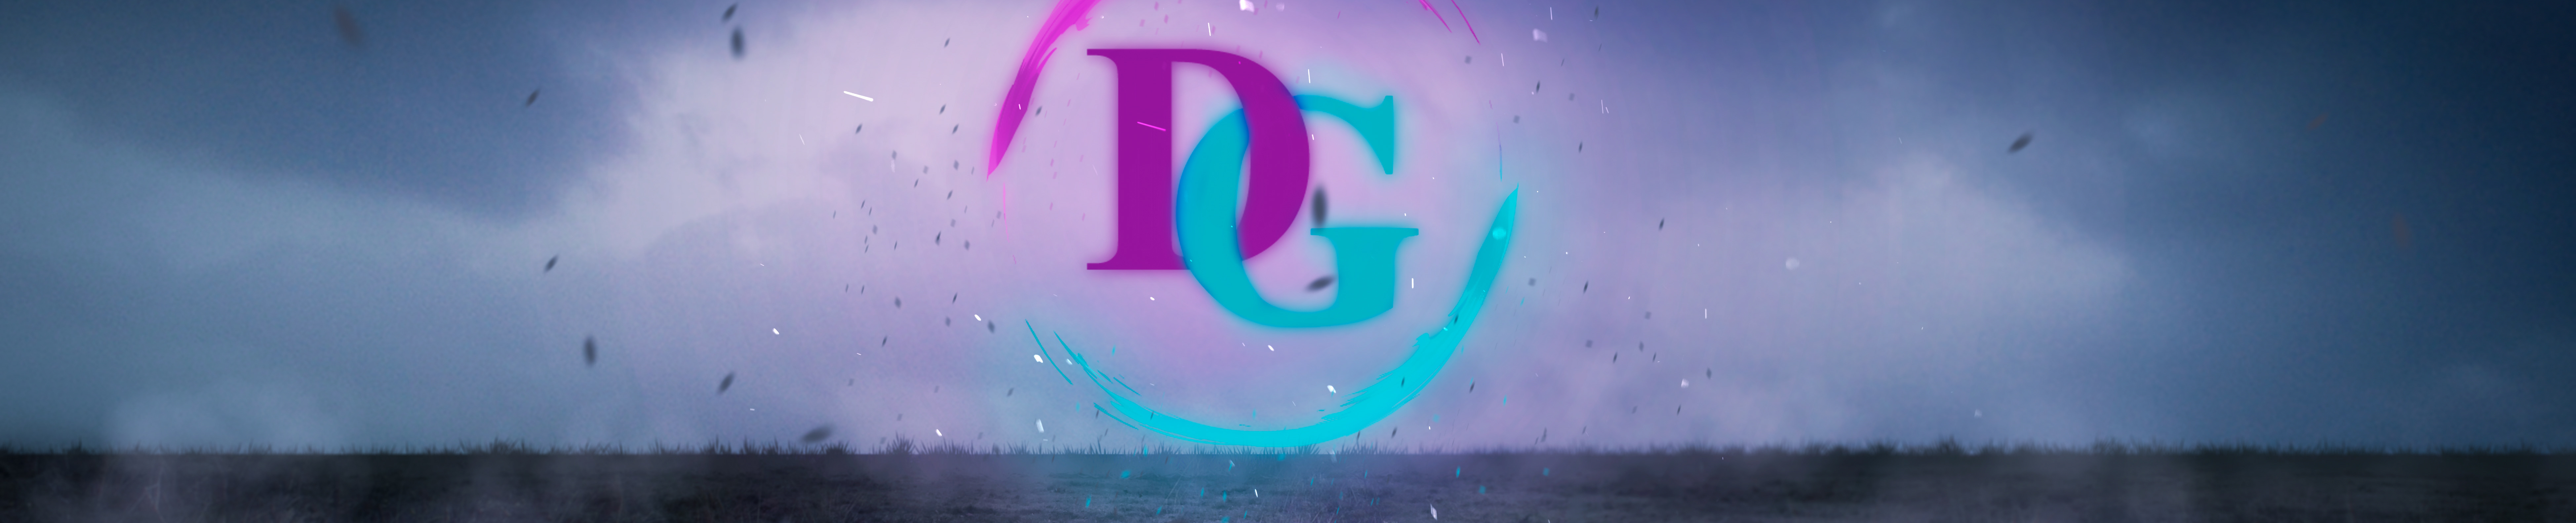 dgphotografy Guerra's profile banner